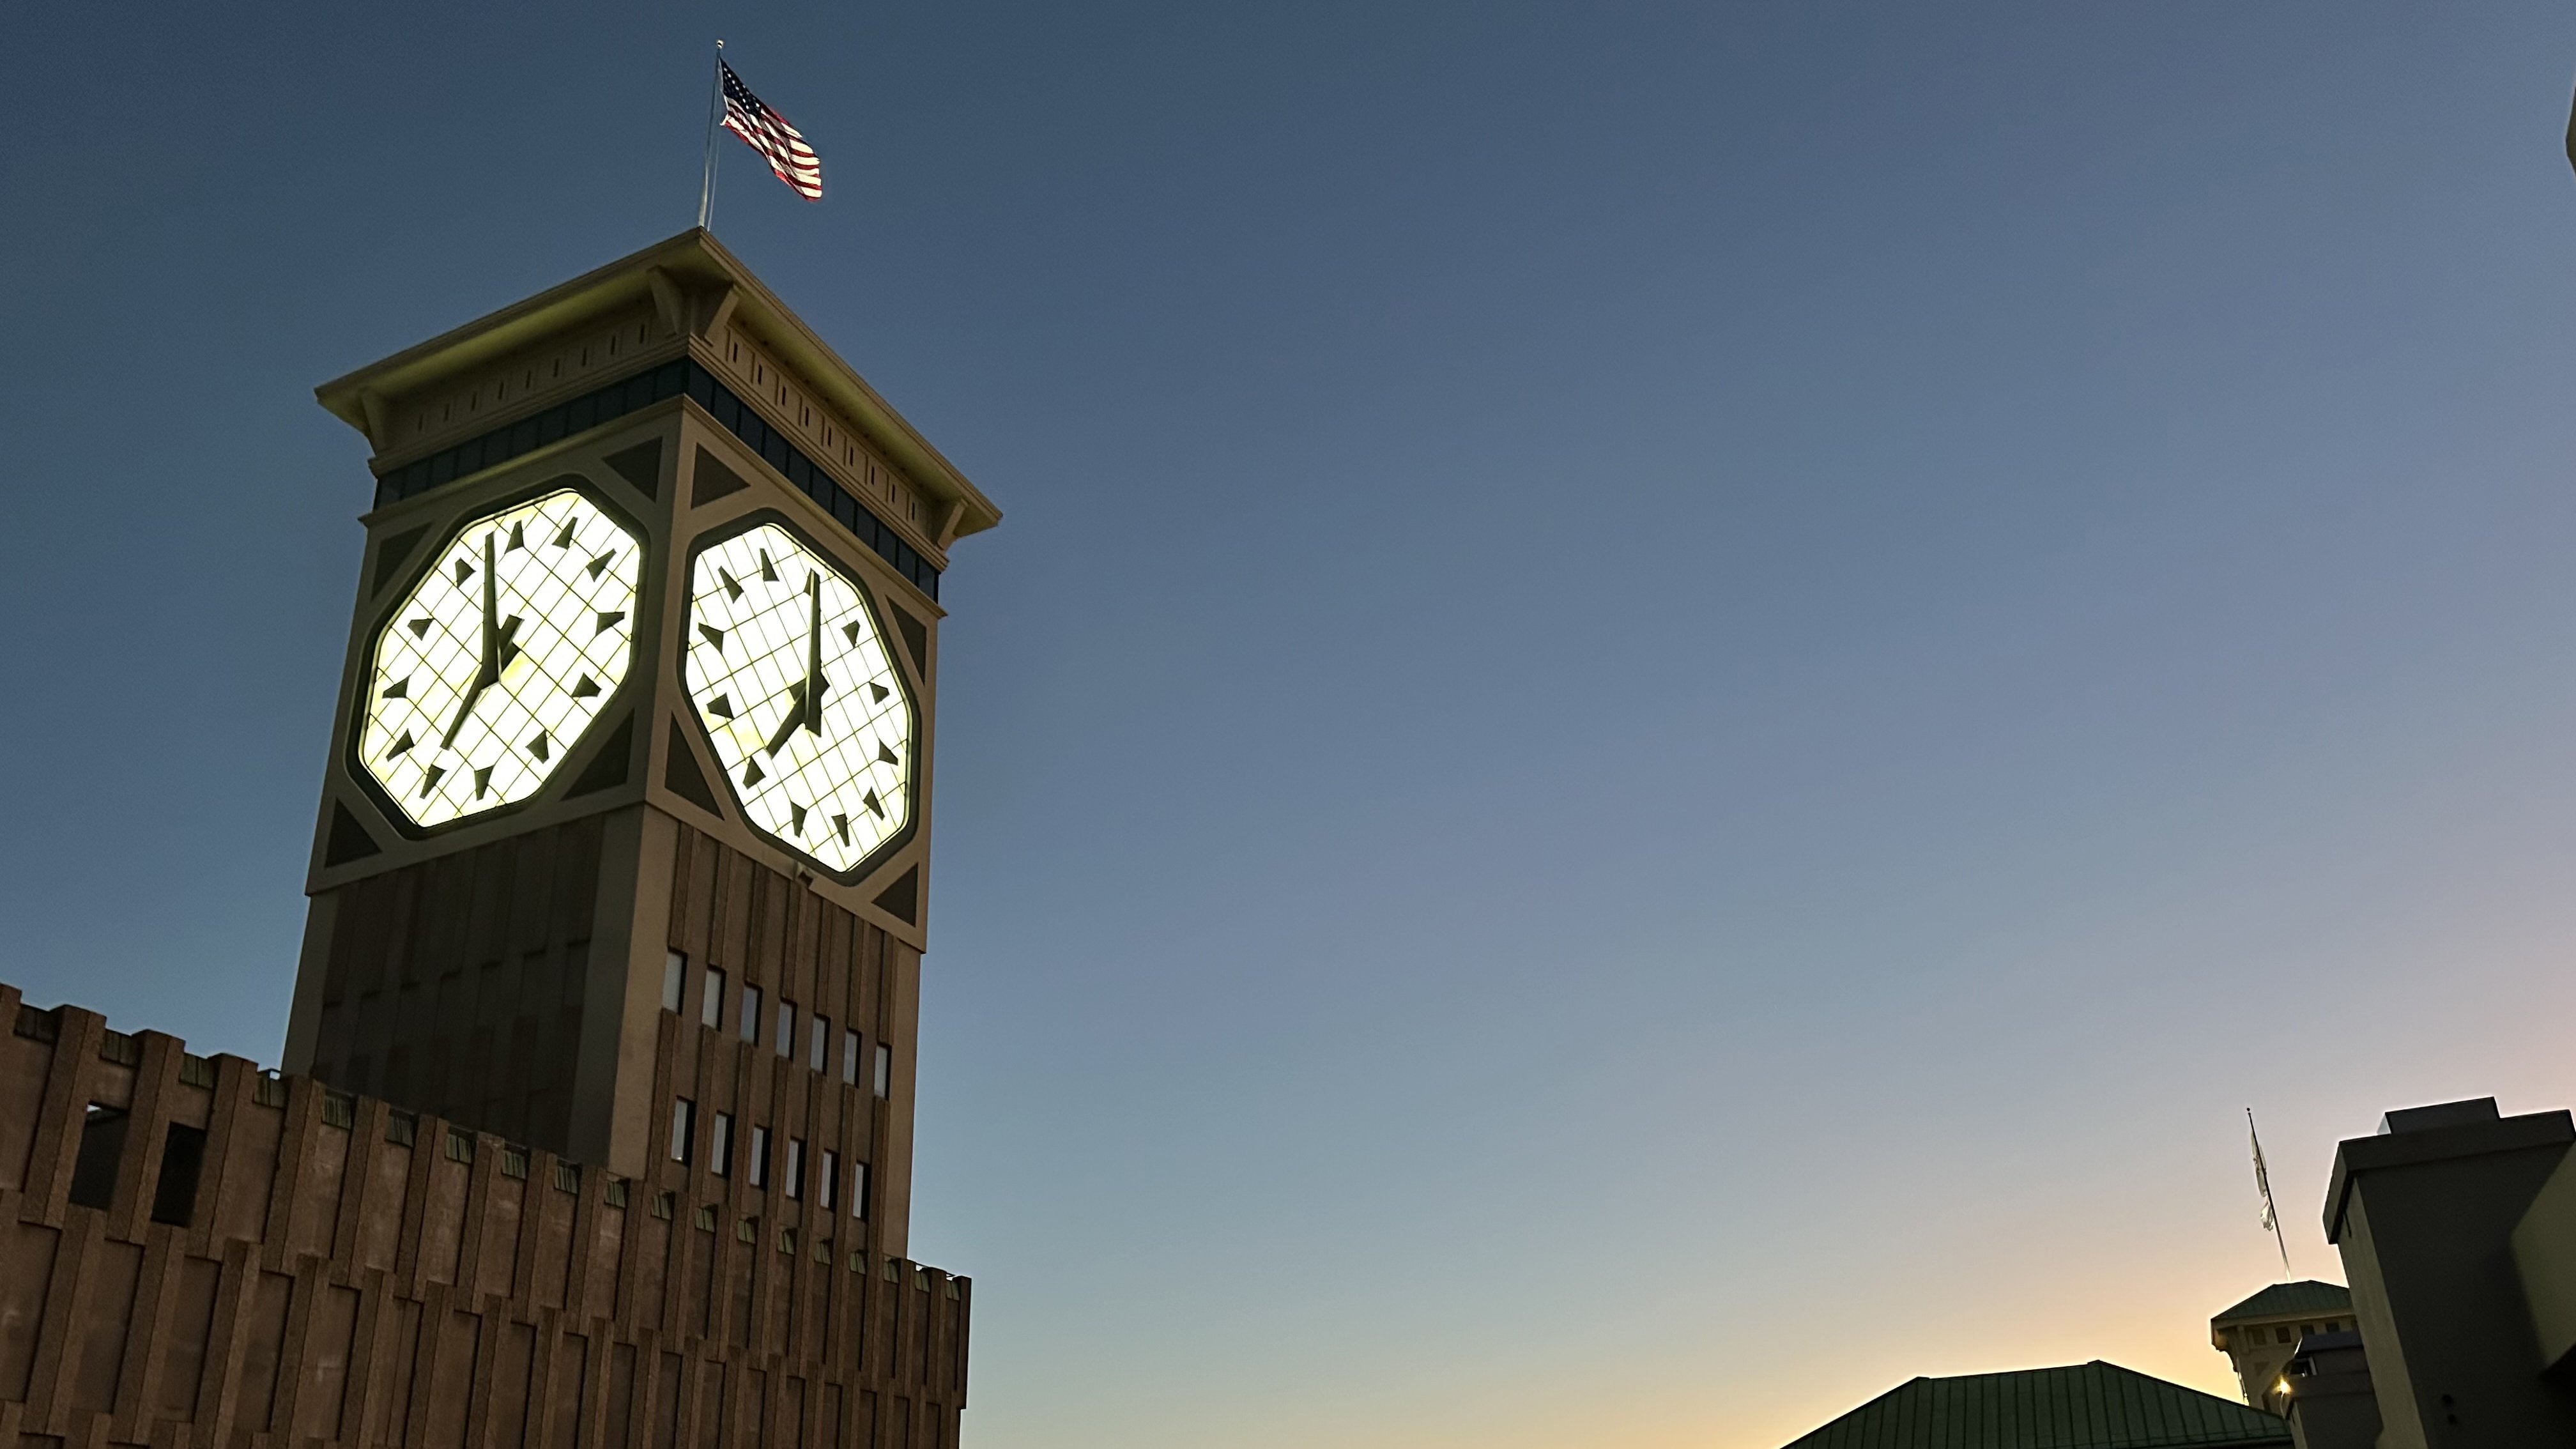 Rockwell Automation Headquarters Clocktower at sunset